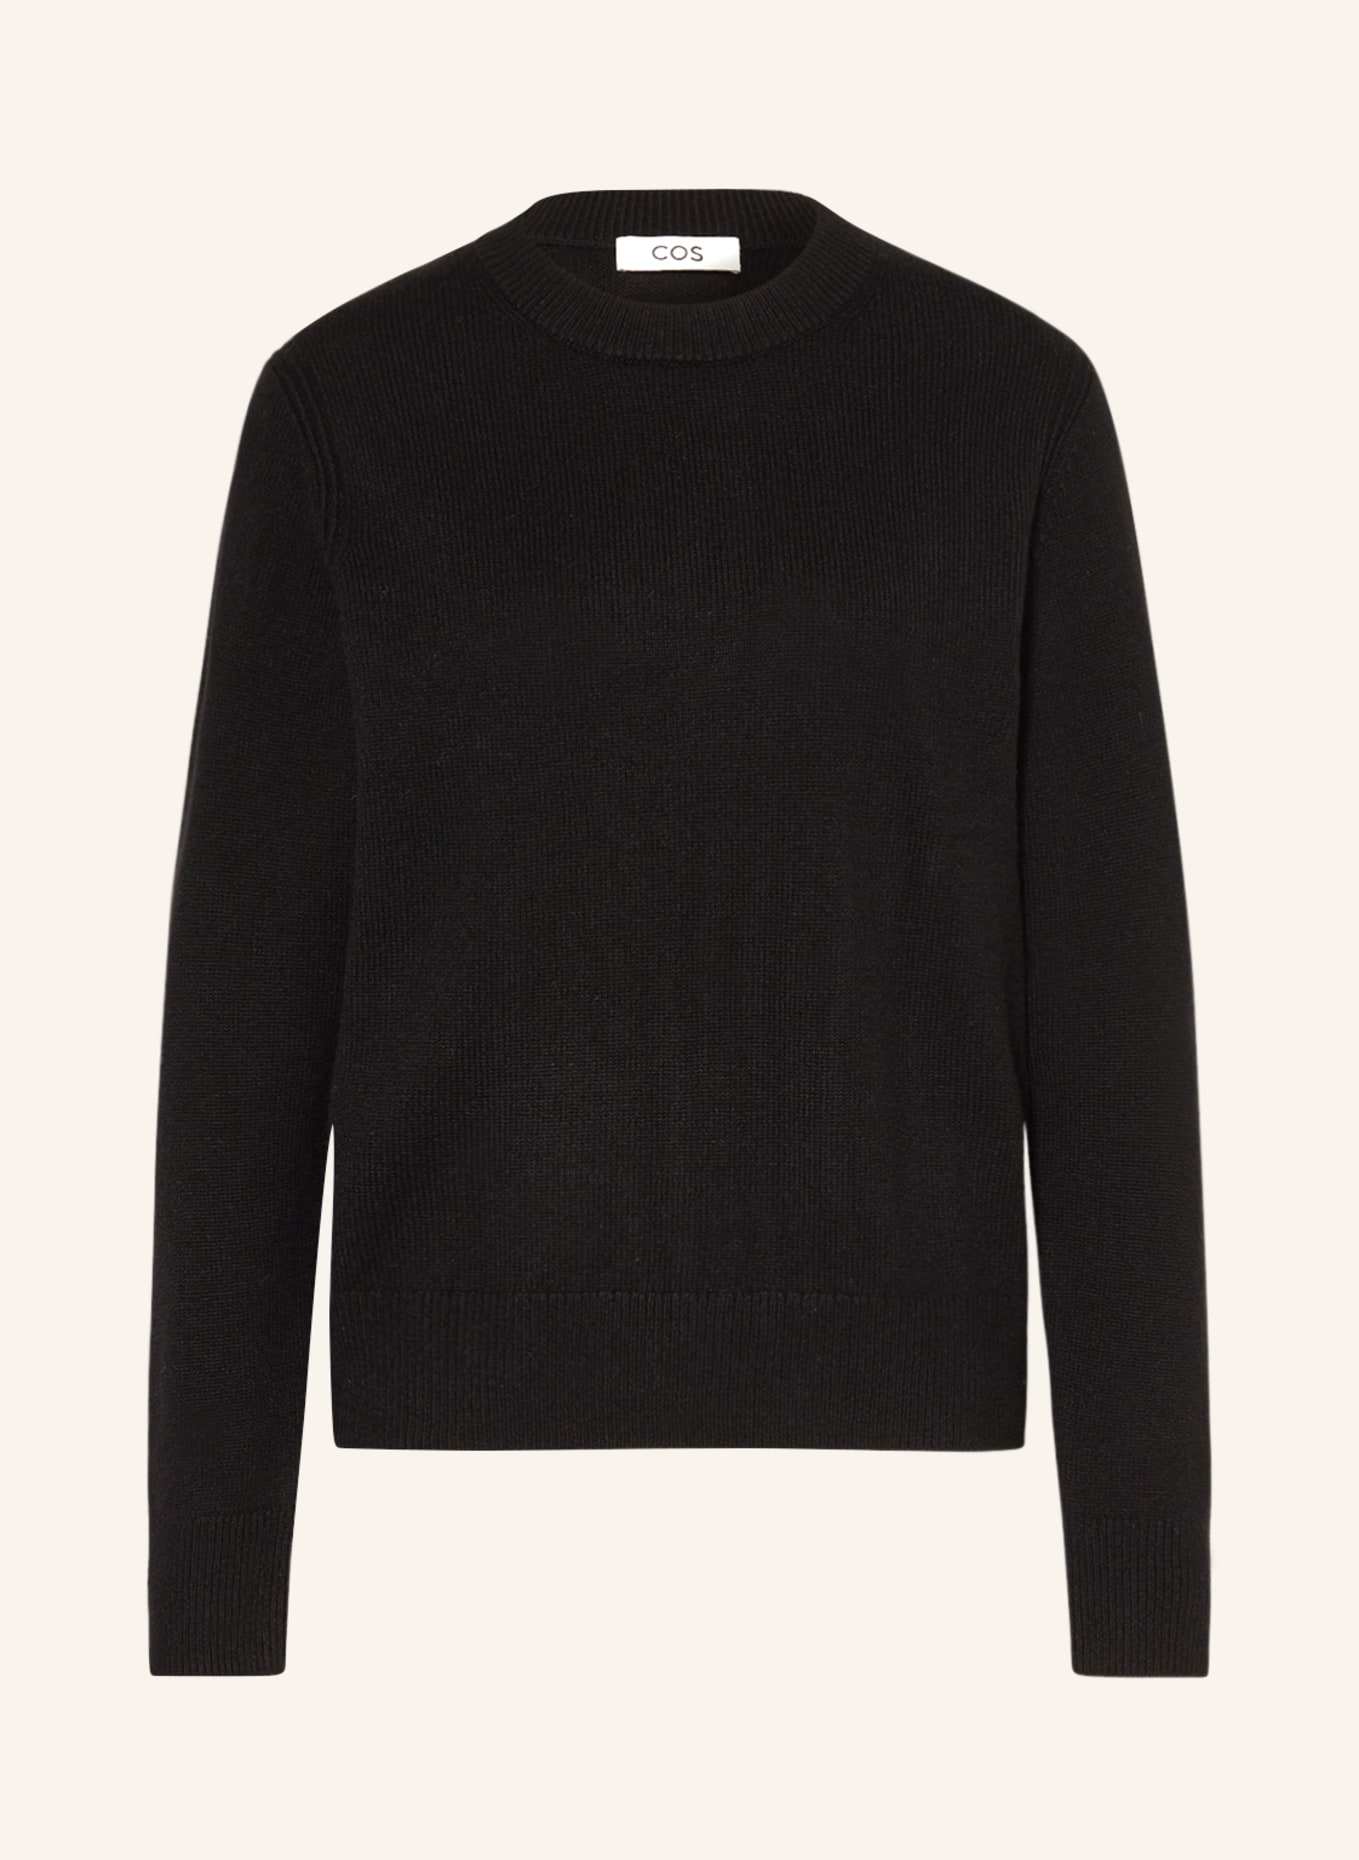 COS Cashmere-Pullover, Farbe: SCHWARZ (Bild 1)